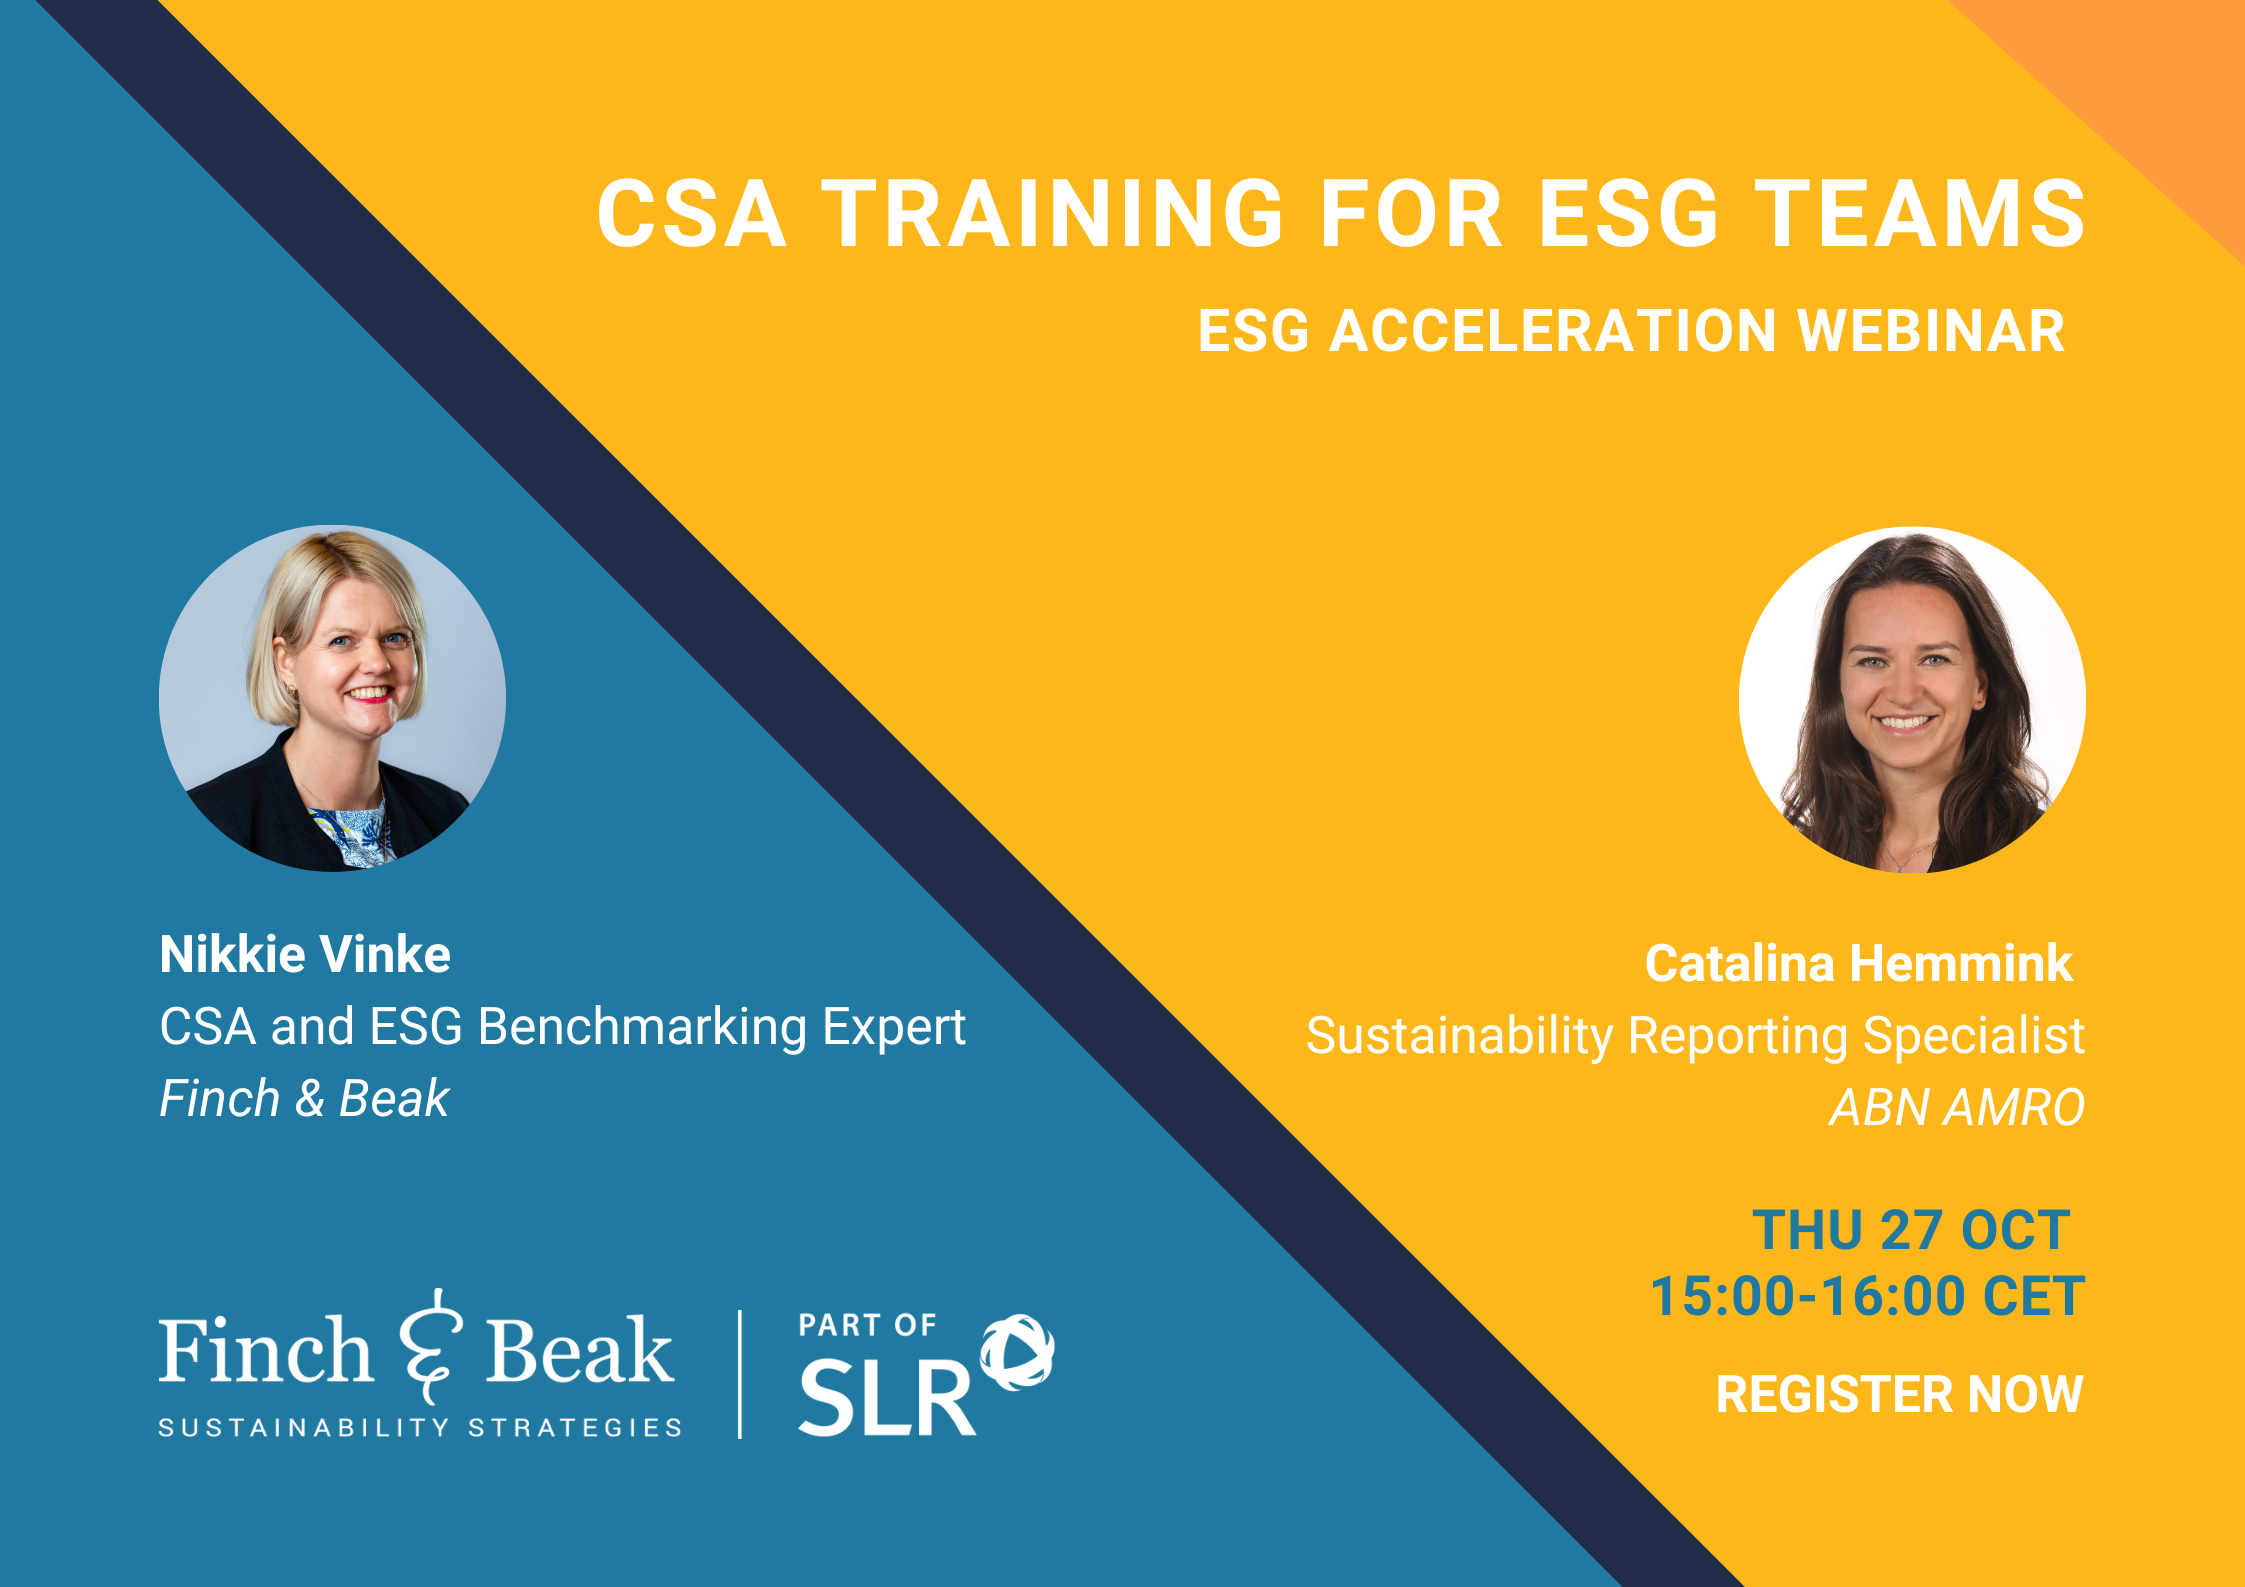 ESG Acceleration Webinar: CSA Training for ESG Teams